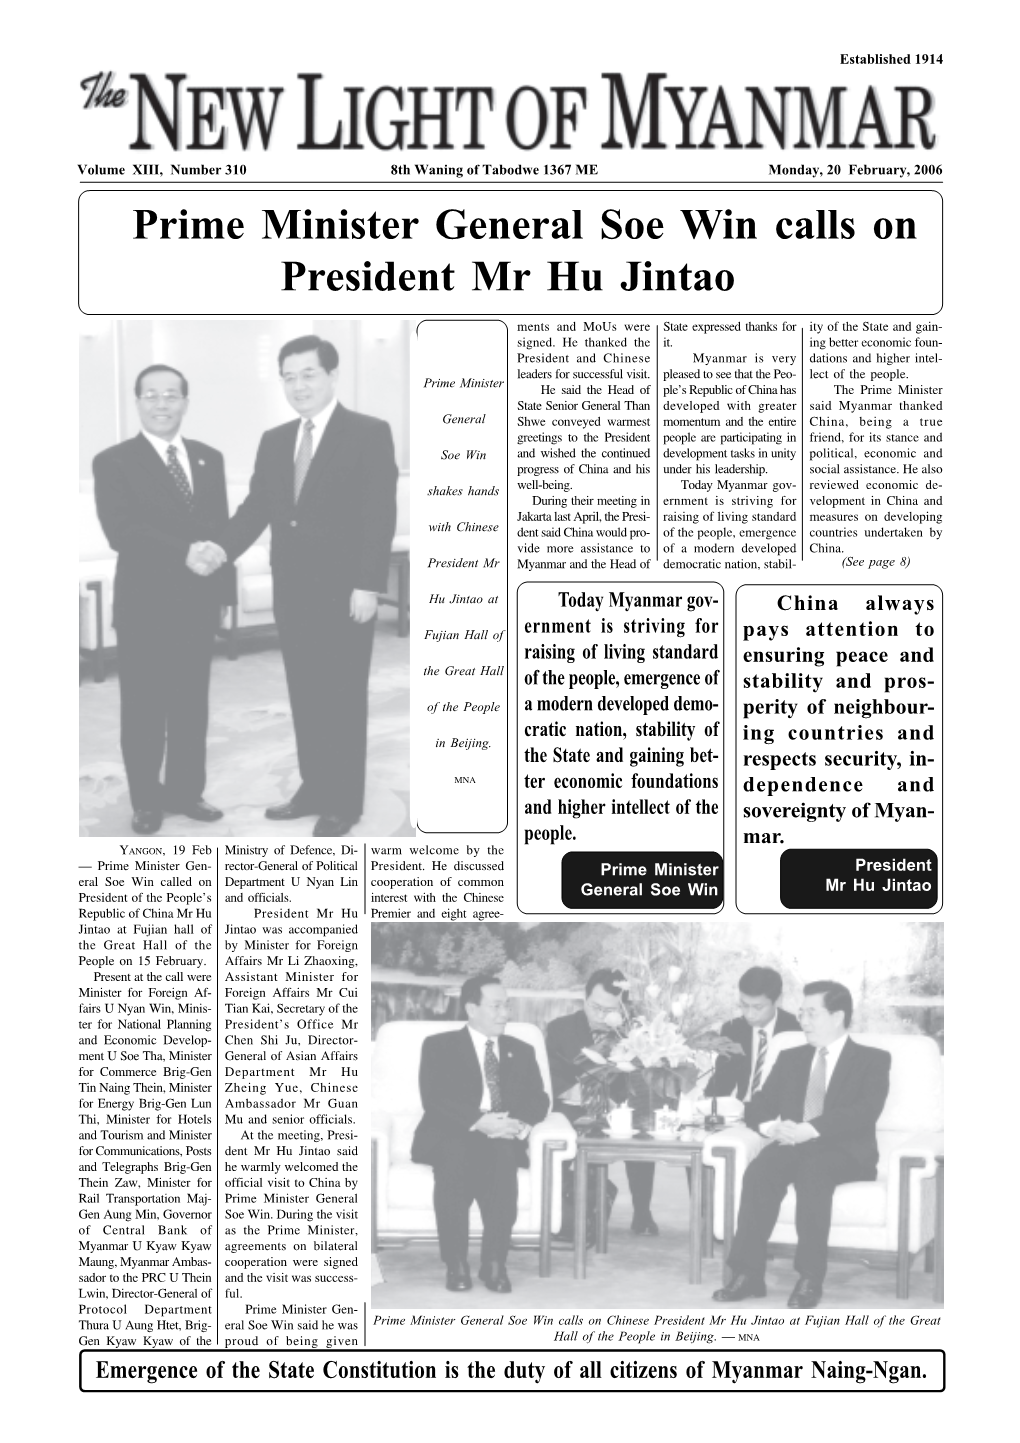 Prime Minister General Soe Win Calls on President Mr Hu Jintao